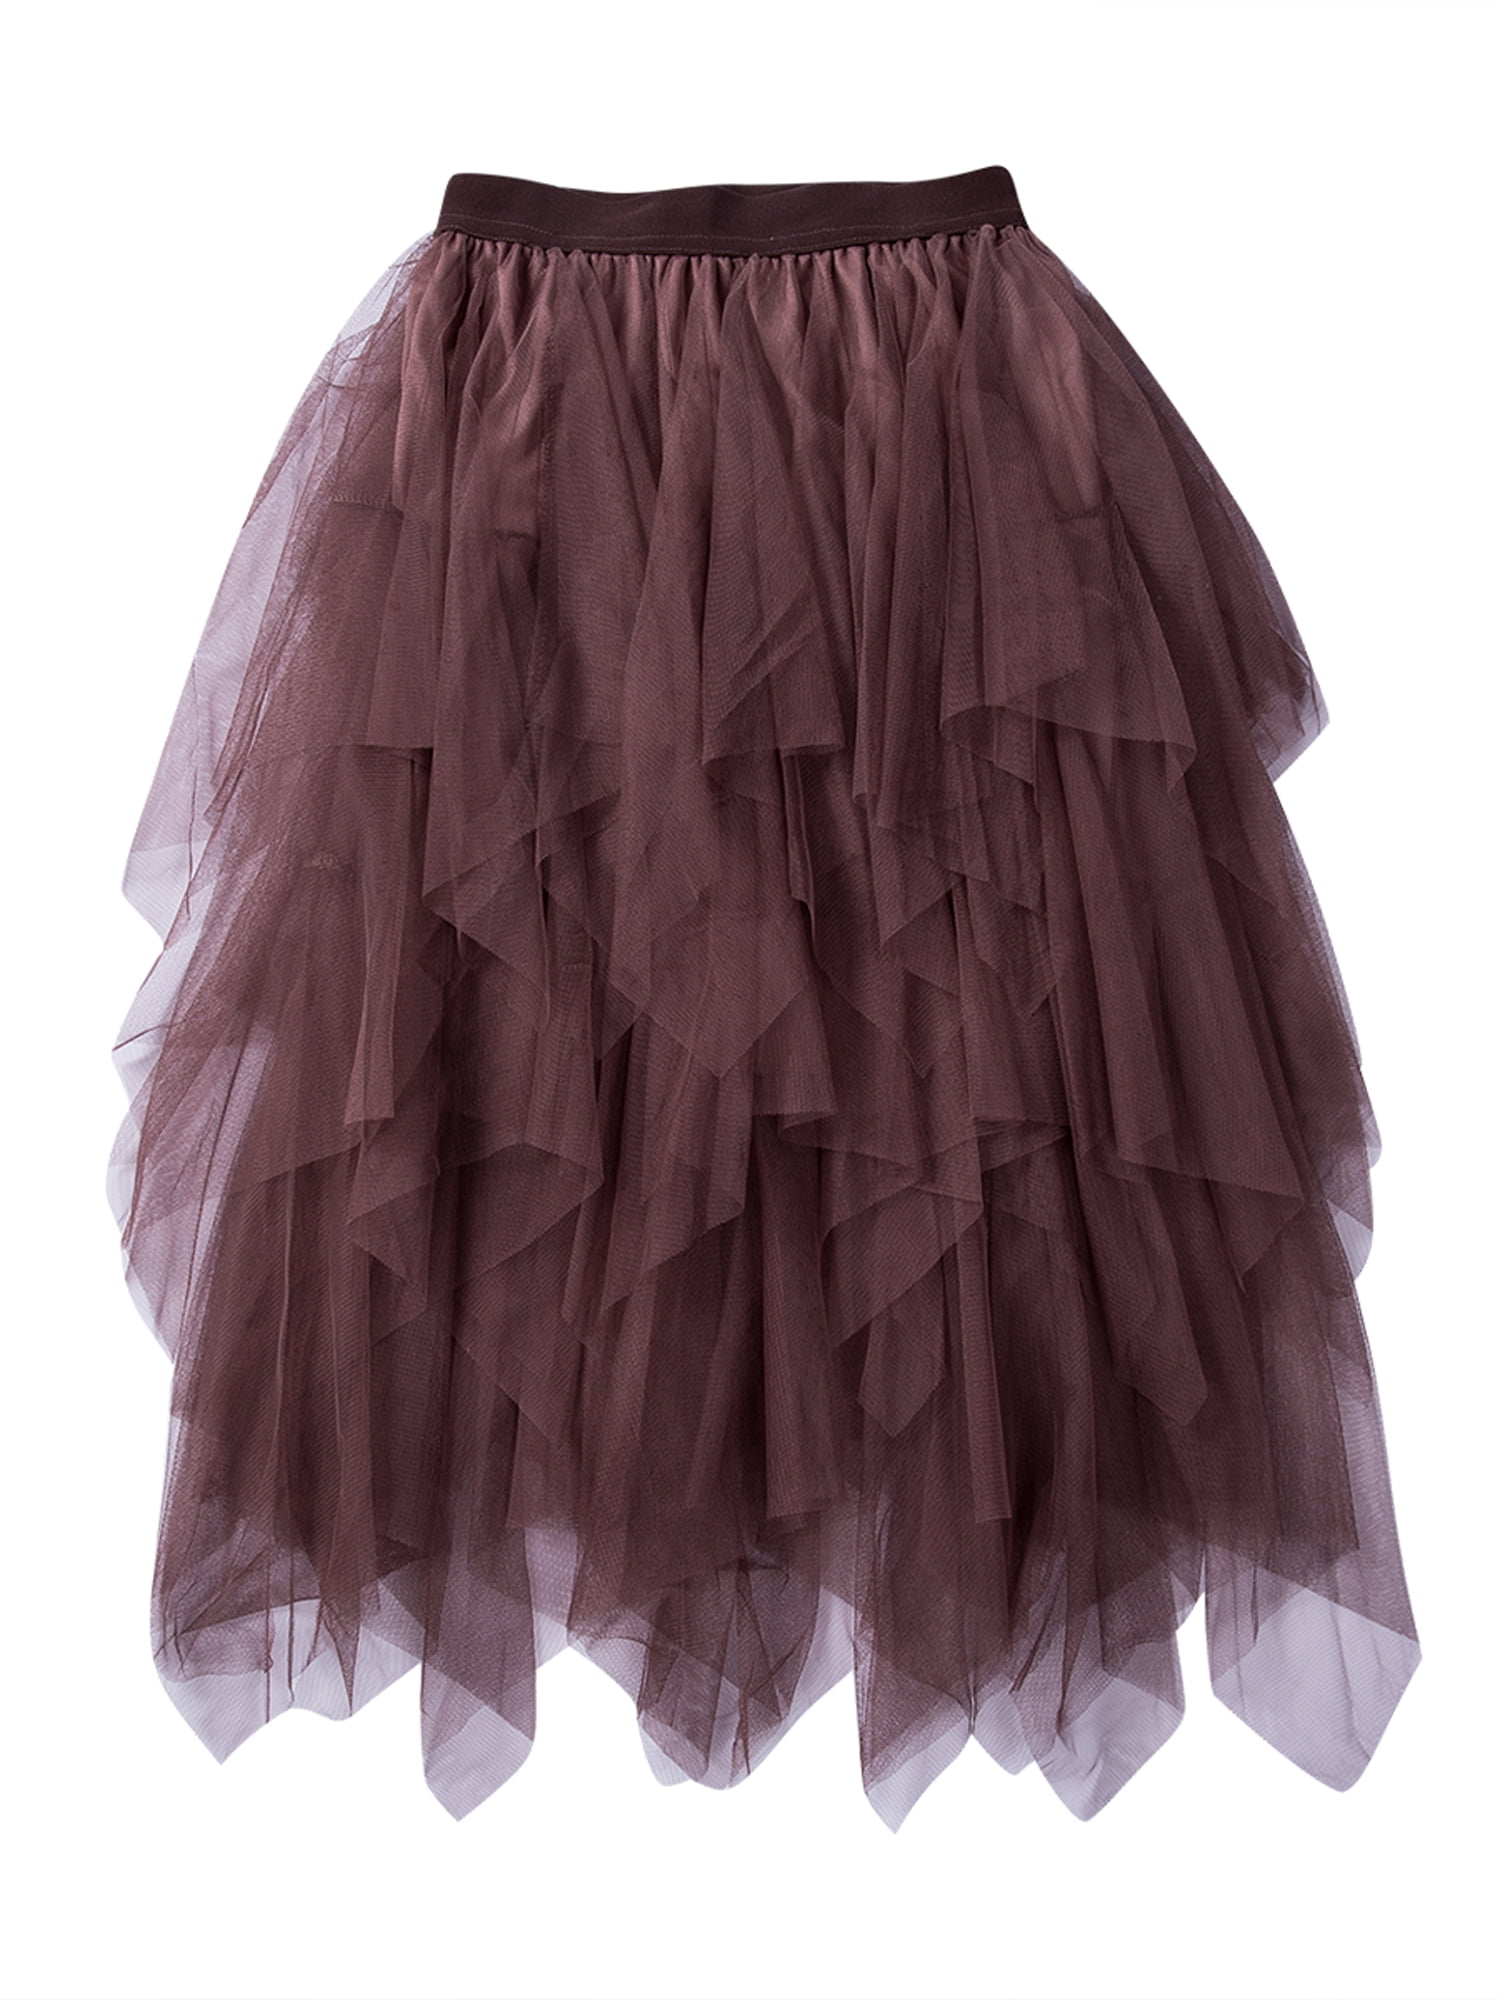 SHEER Petti-Skirt Custom Made Pink or Blue Adult Sissy 2 LAYERS Mirror Organza 